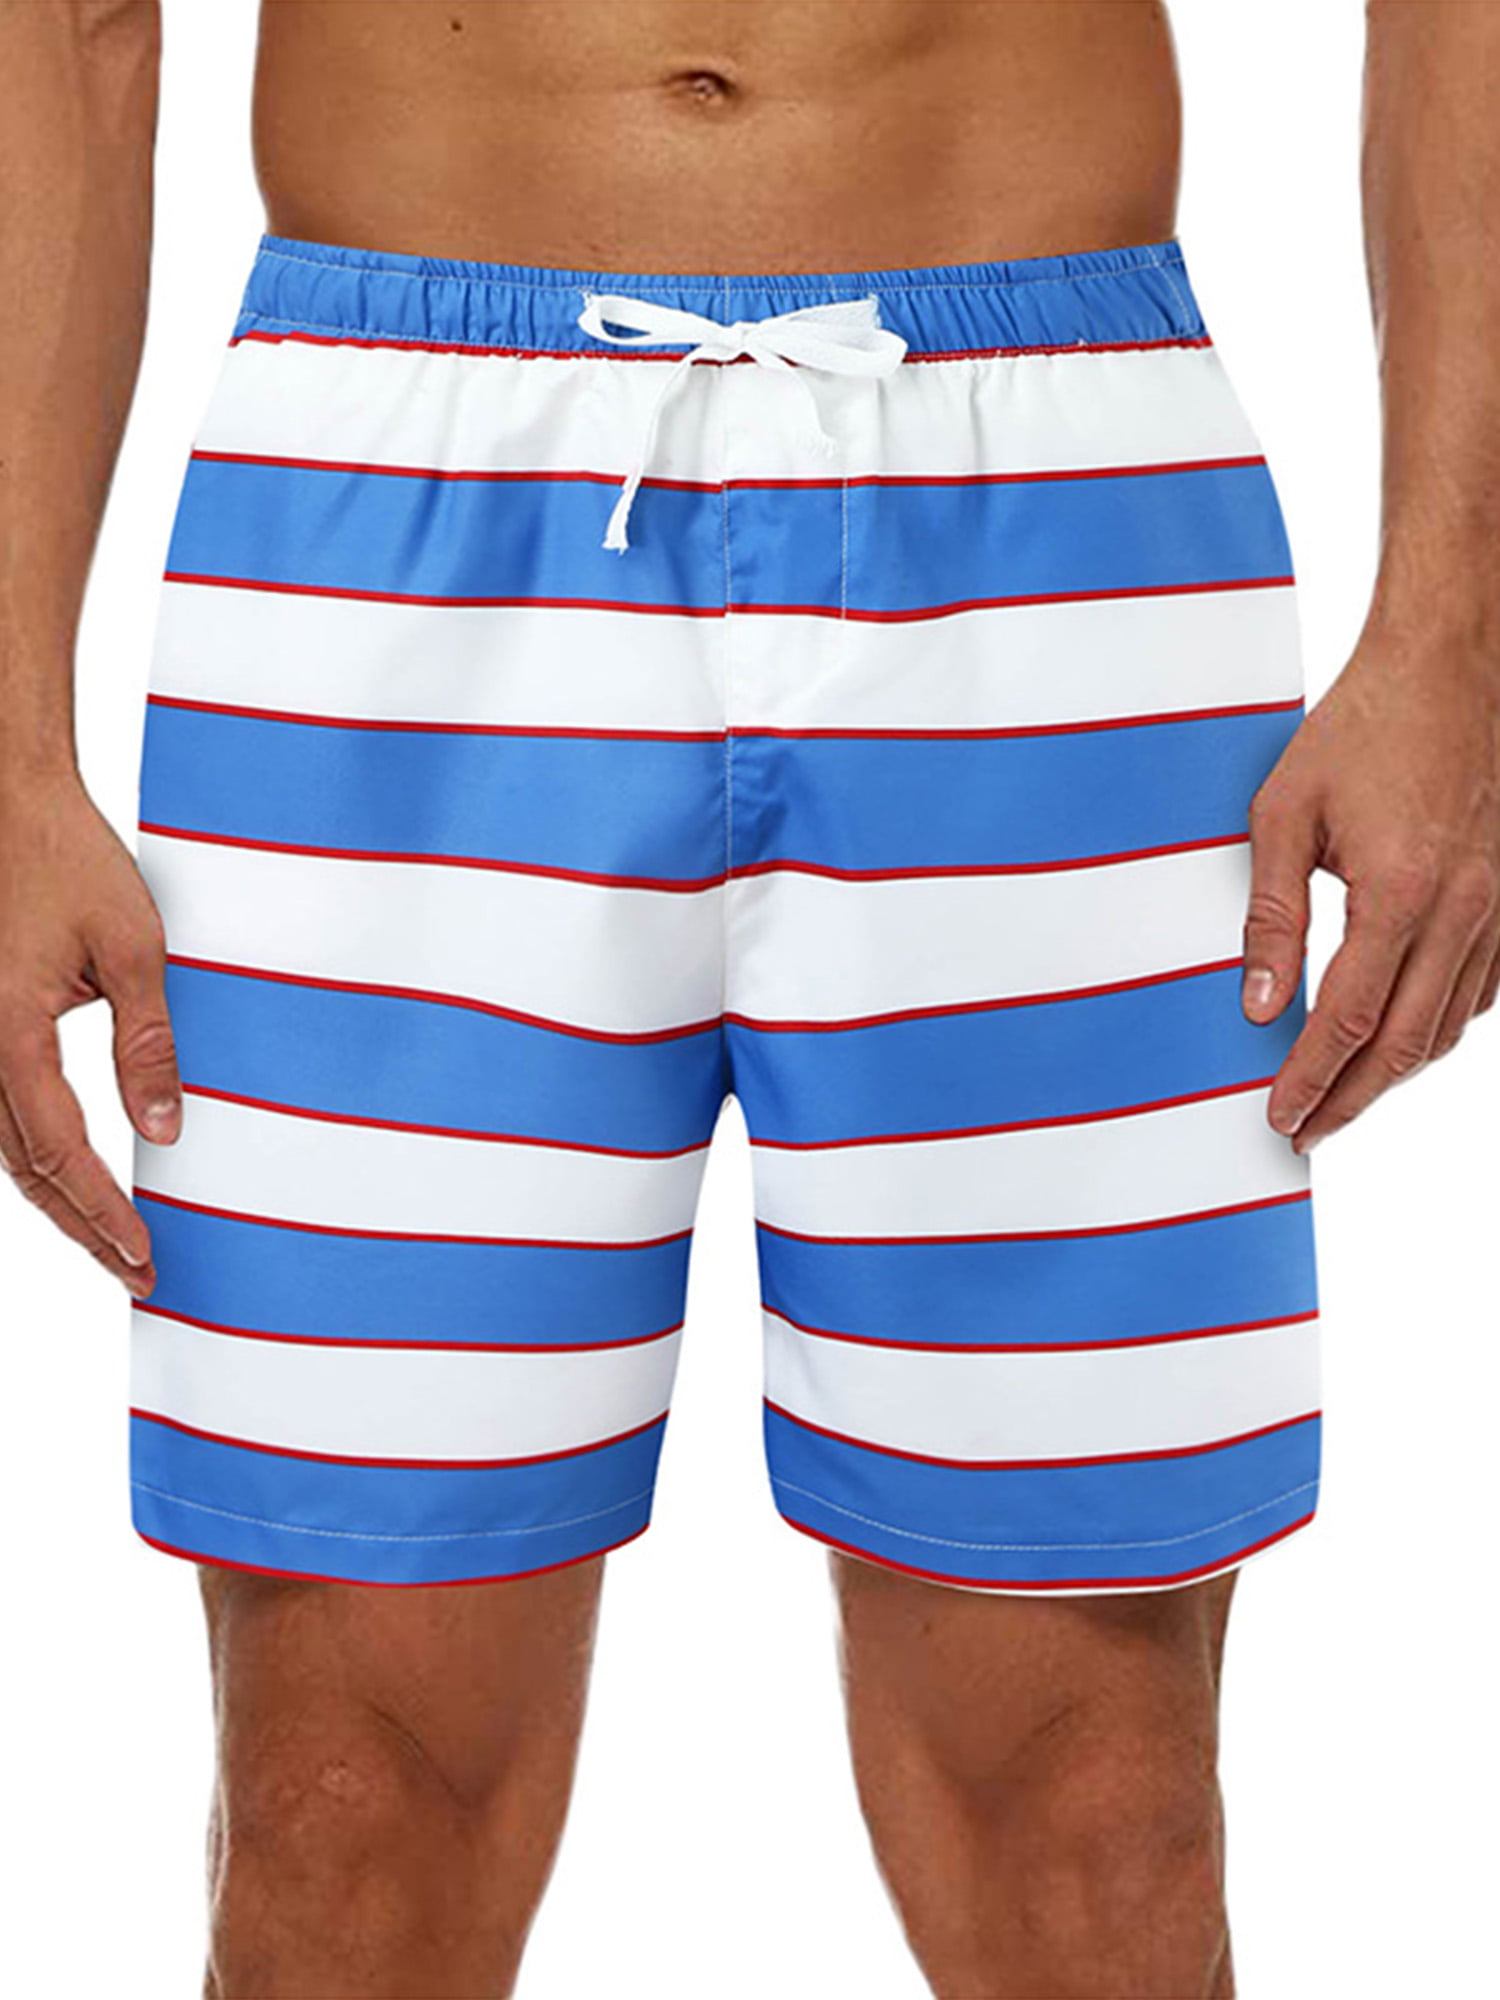 Blue Ocean Striped Decoration Mens Fashion Casual Classic Beach Shorts Quick-Dry Gym Adjustable Drawstring Shorts Yoga 